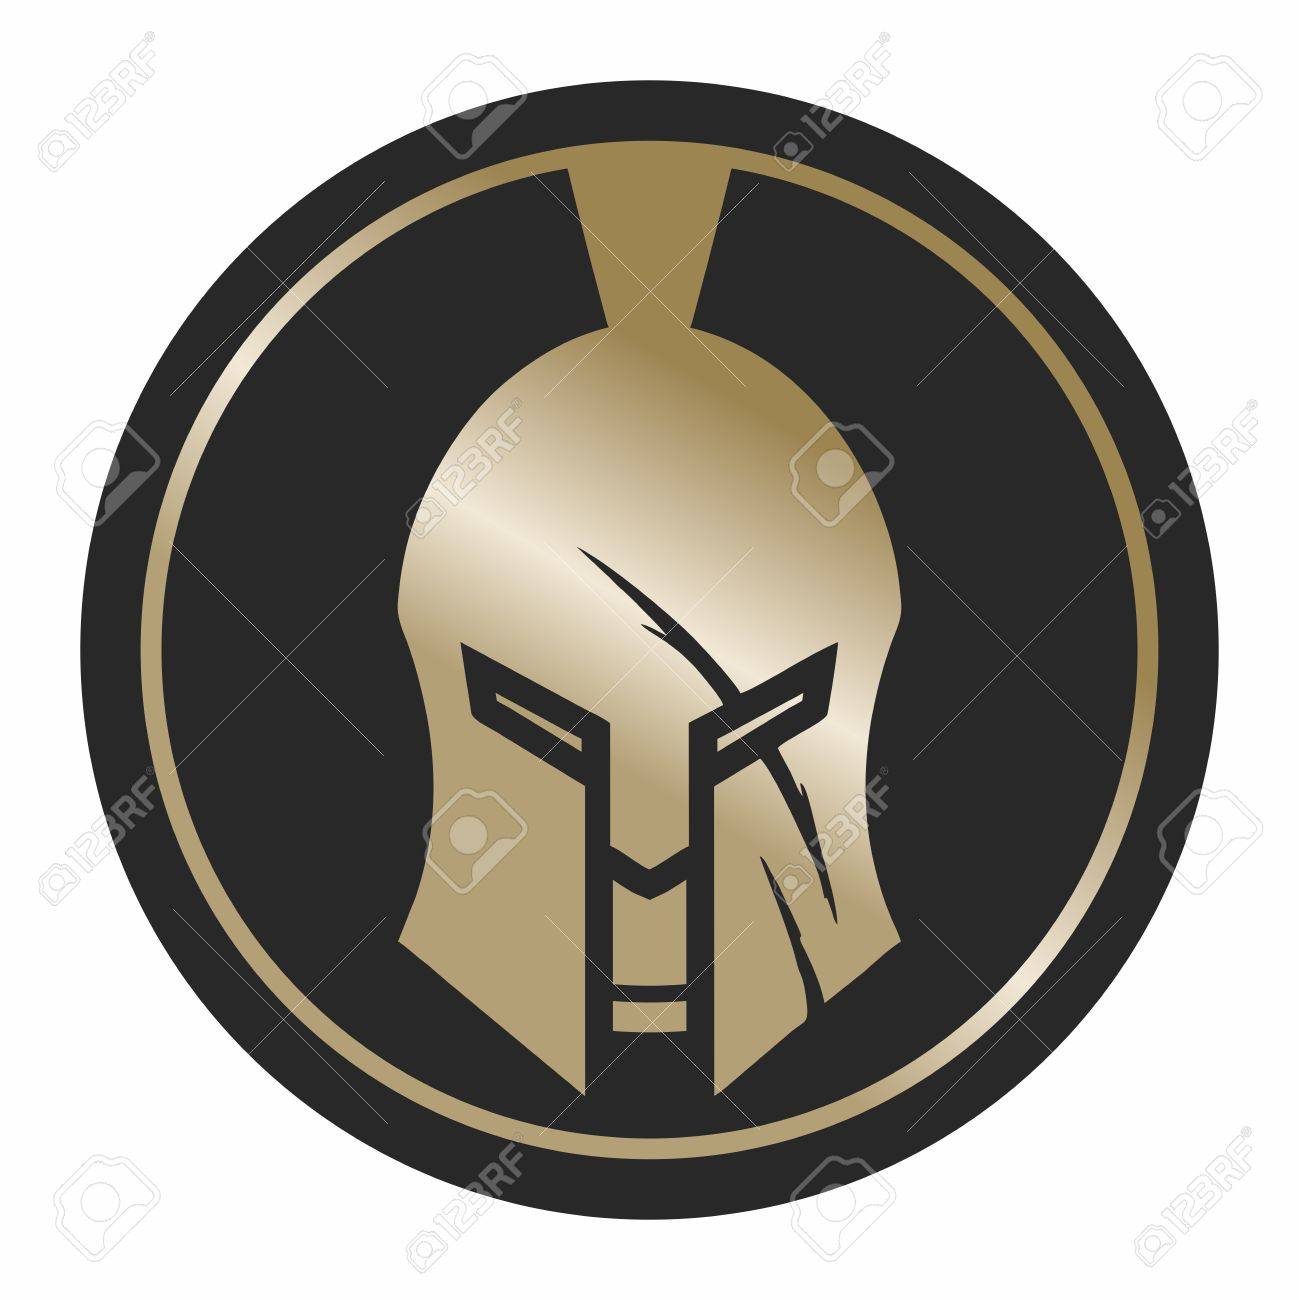 spartan clipart icon